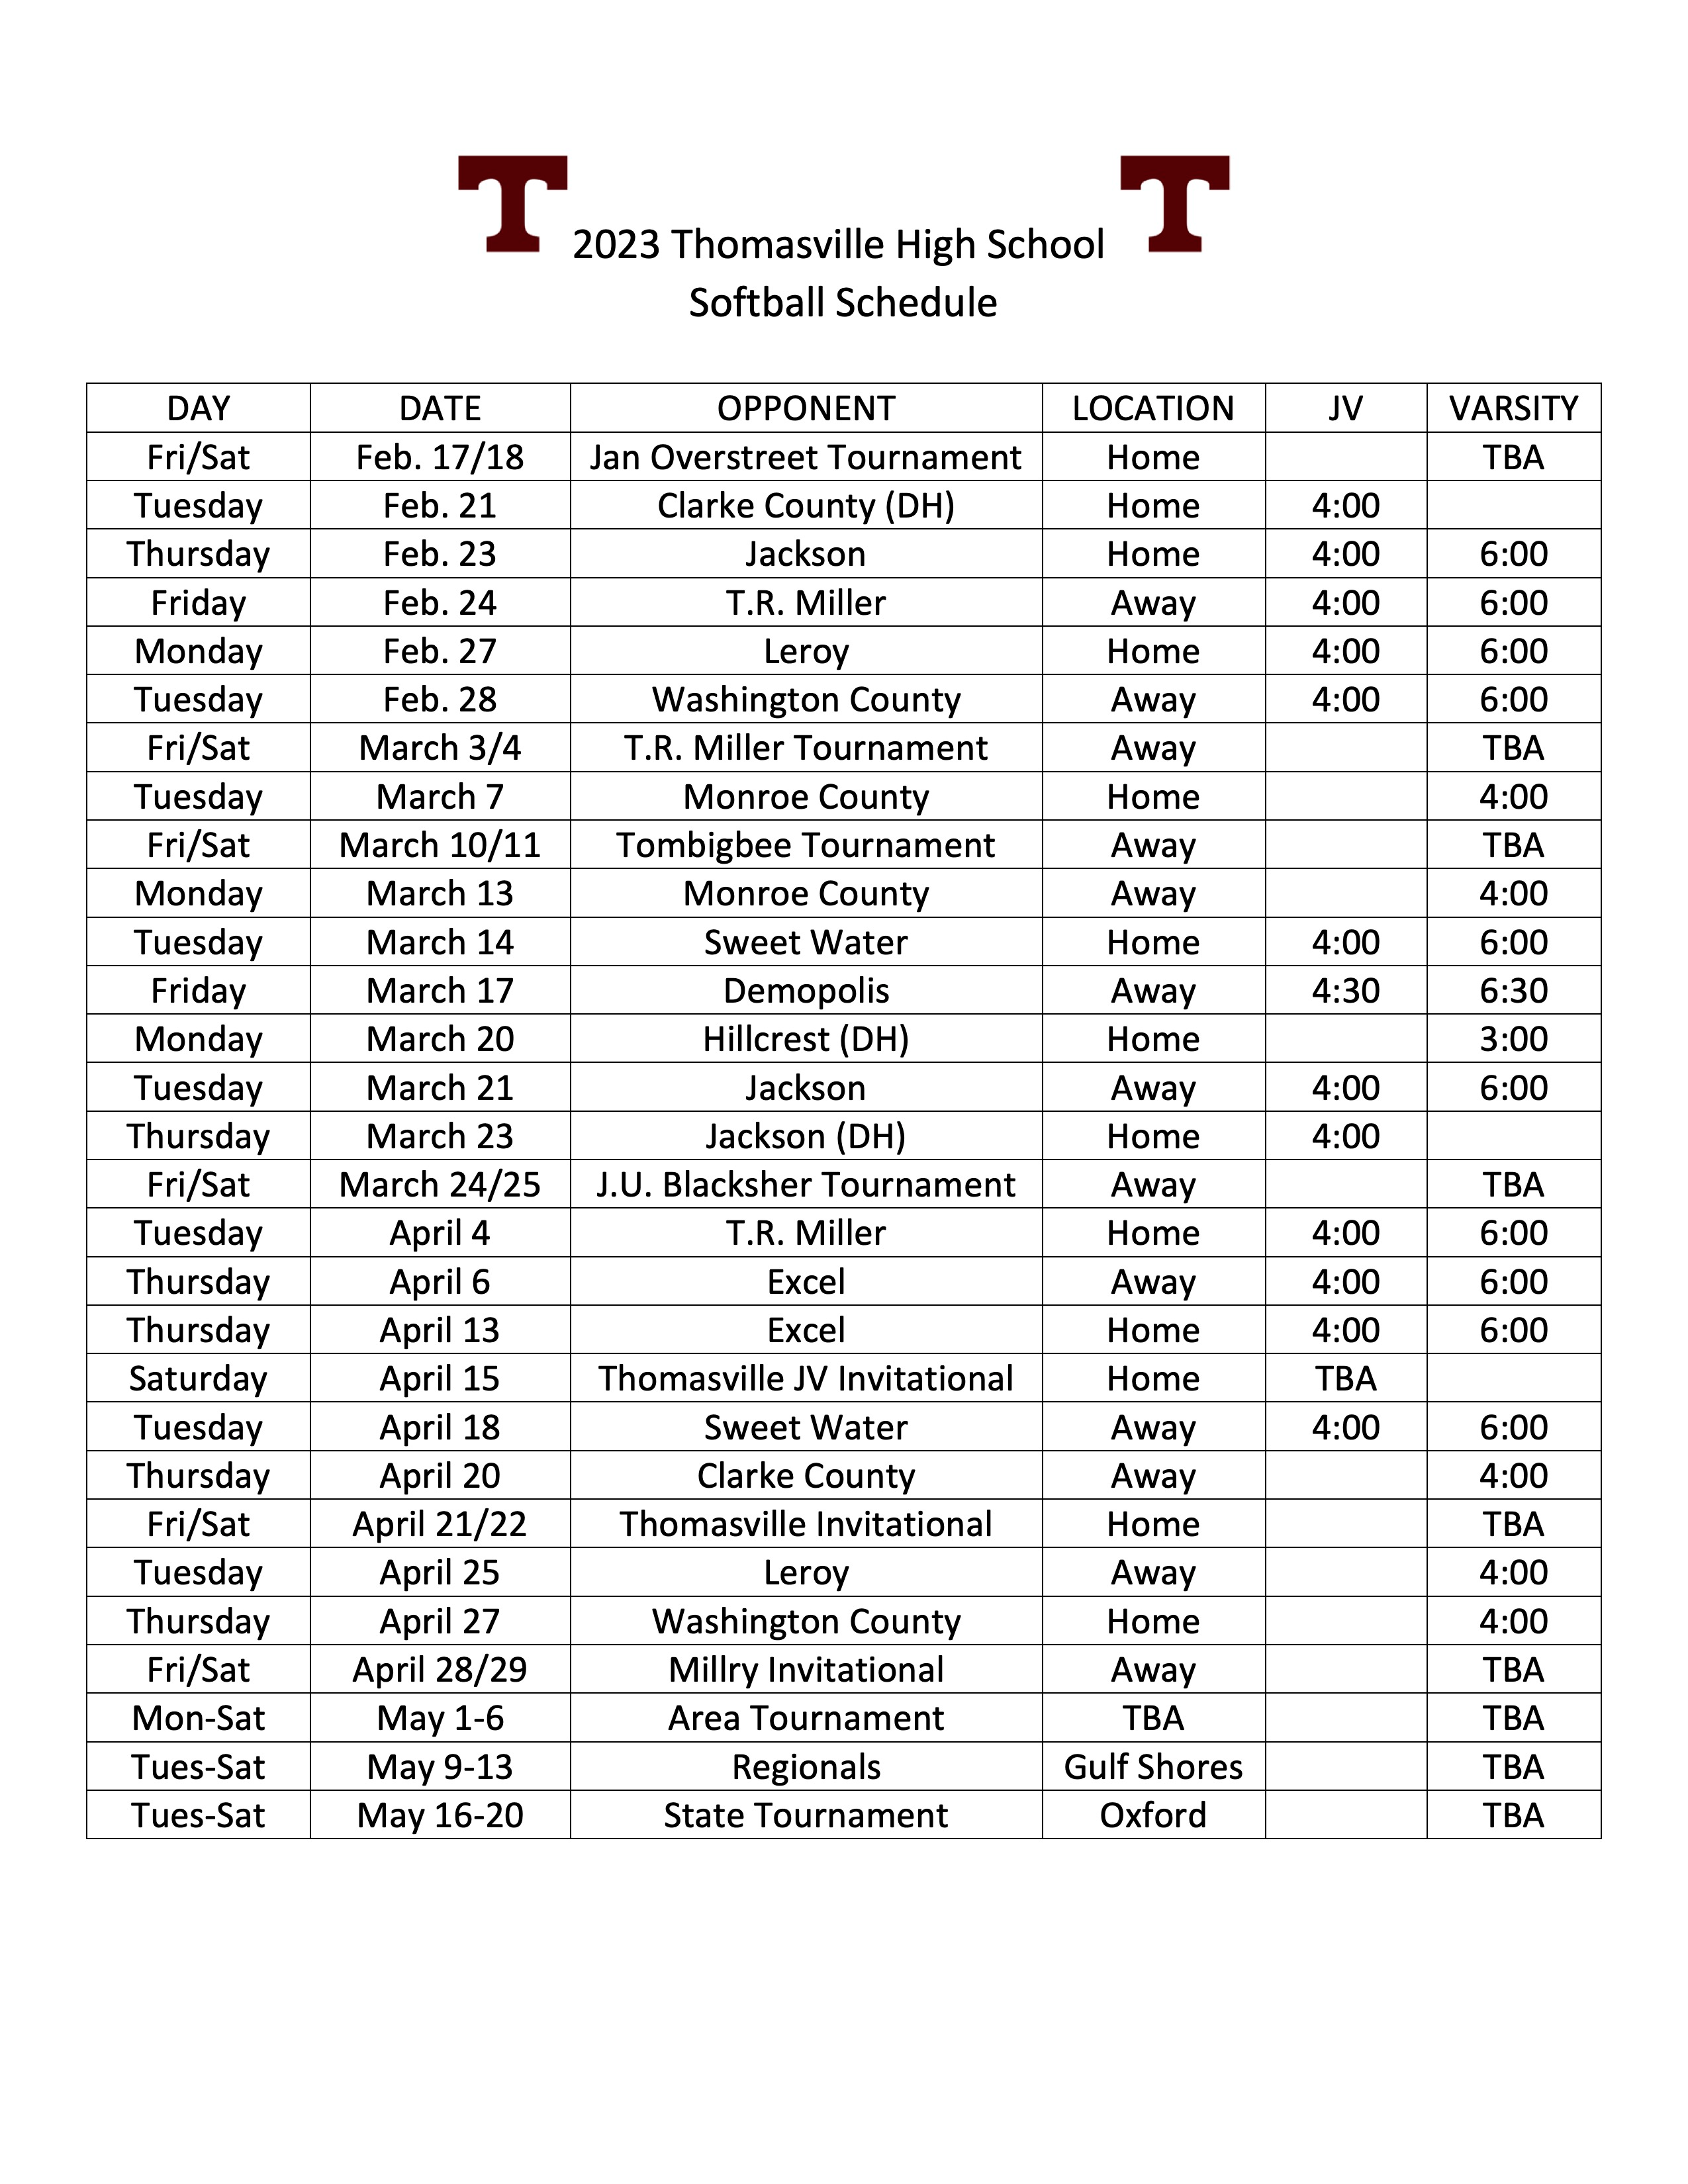 2022 softball schedule